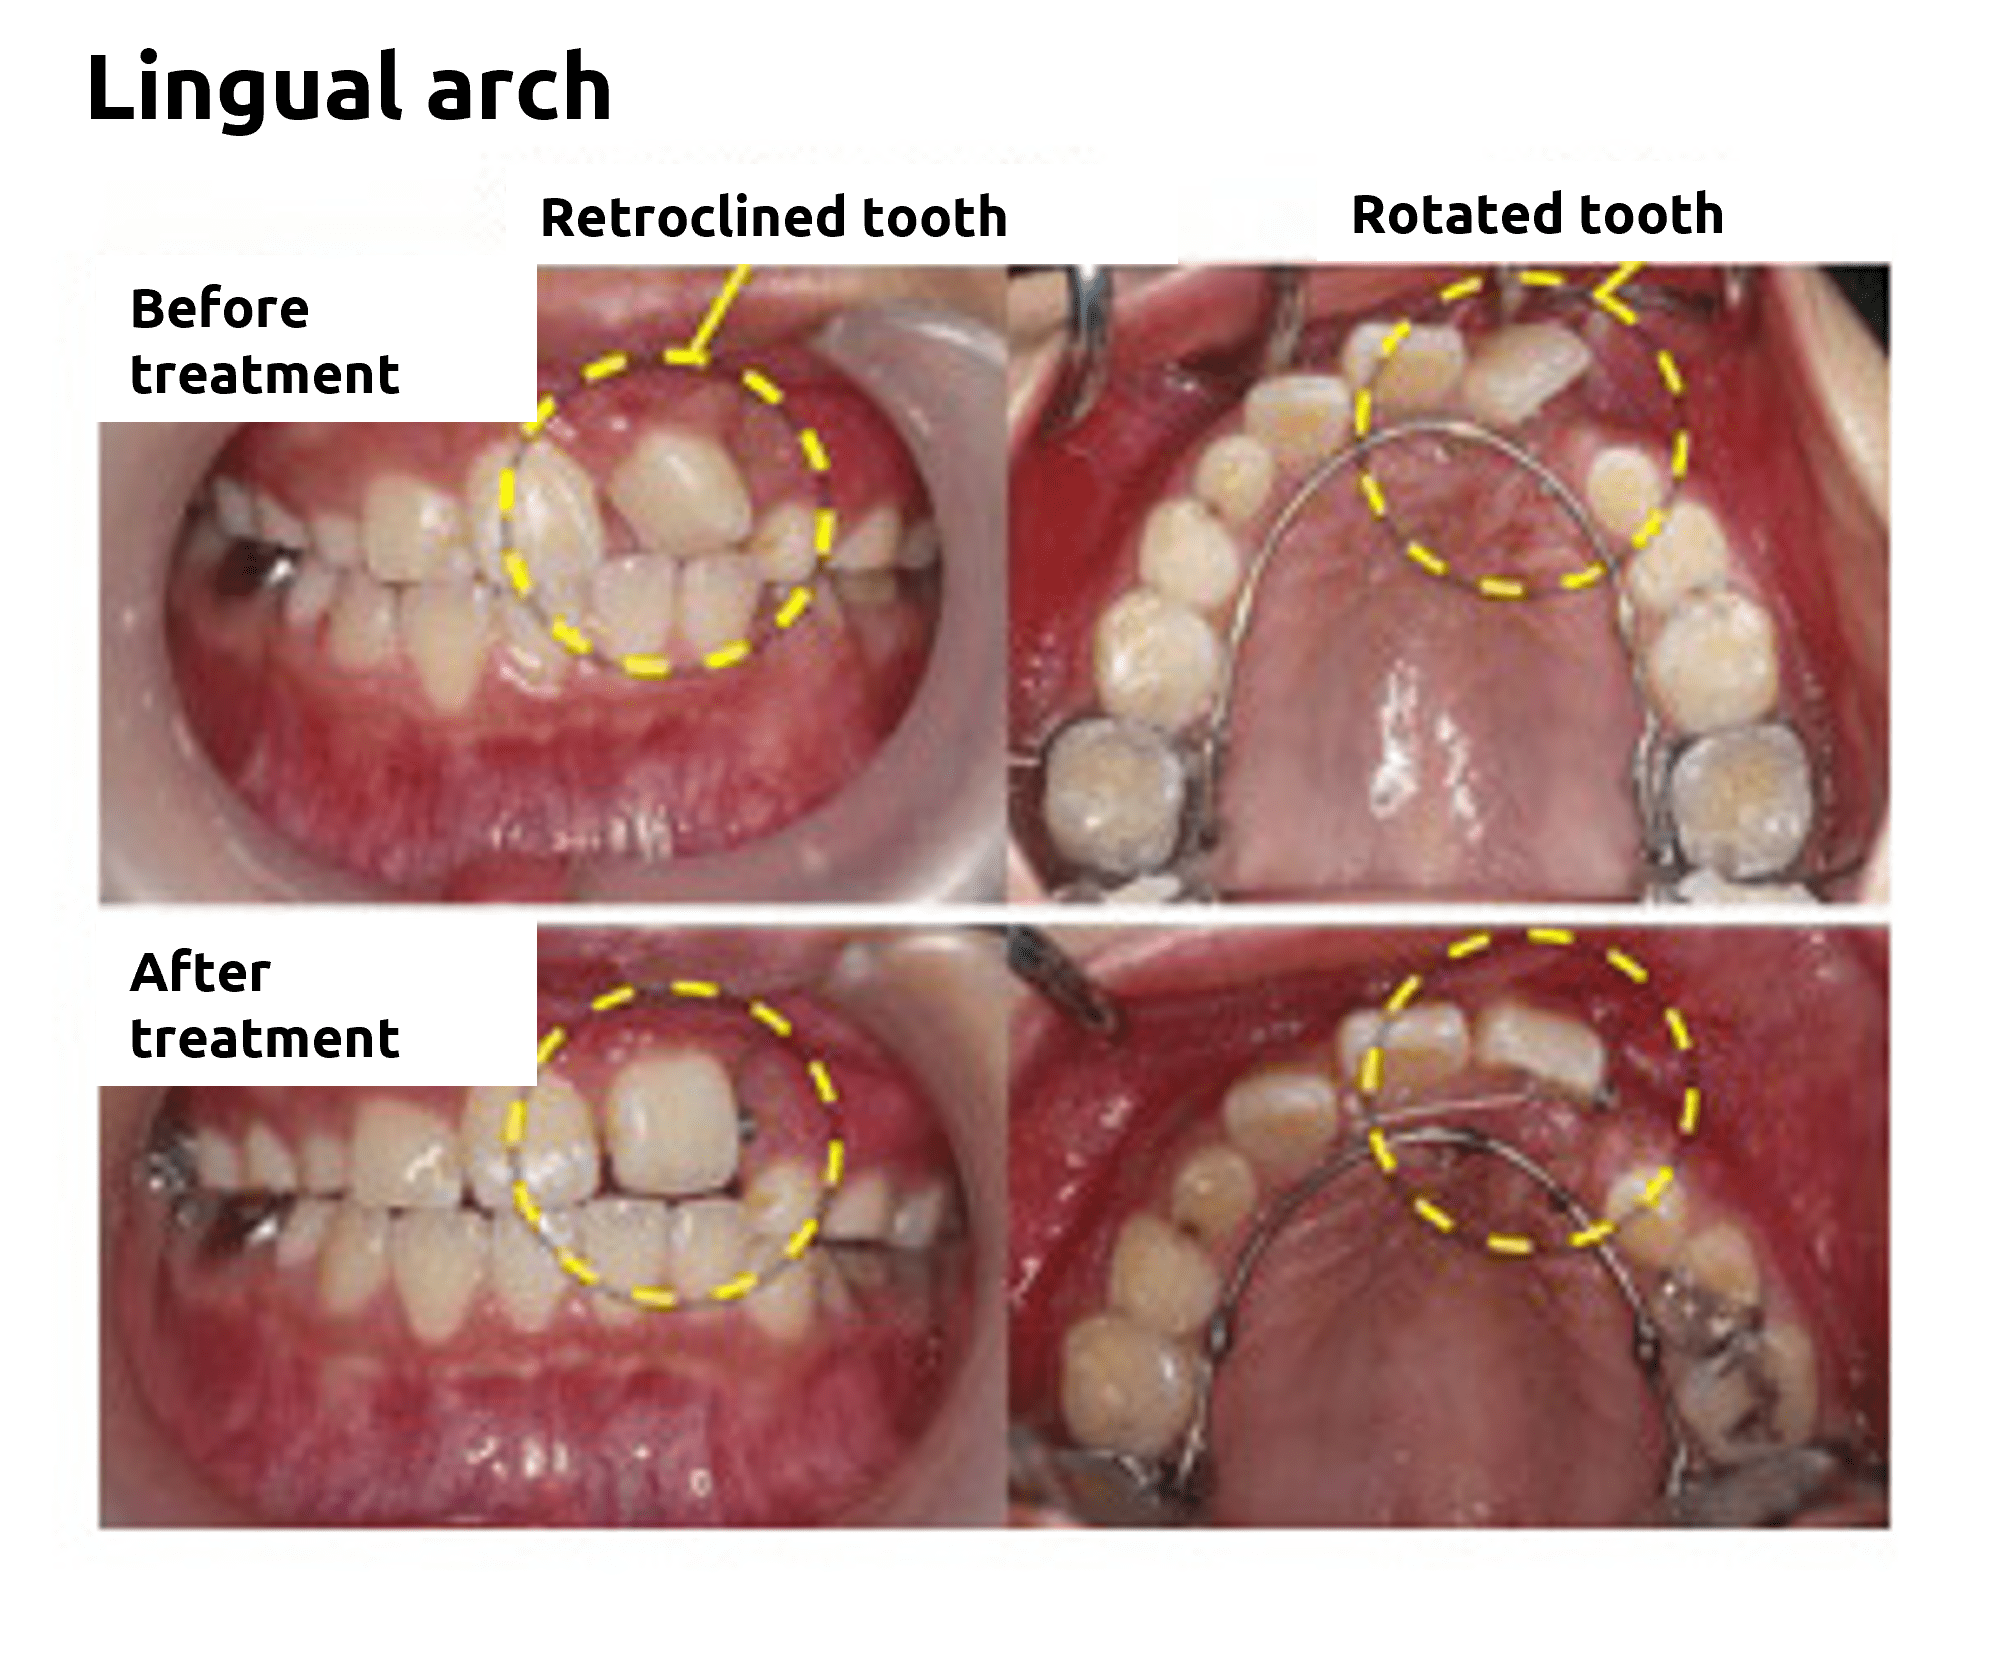 Lingual arch